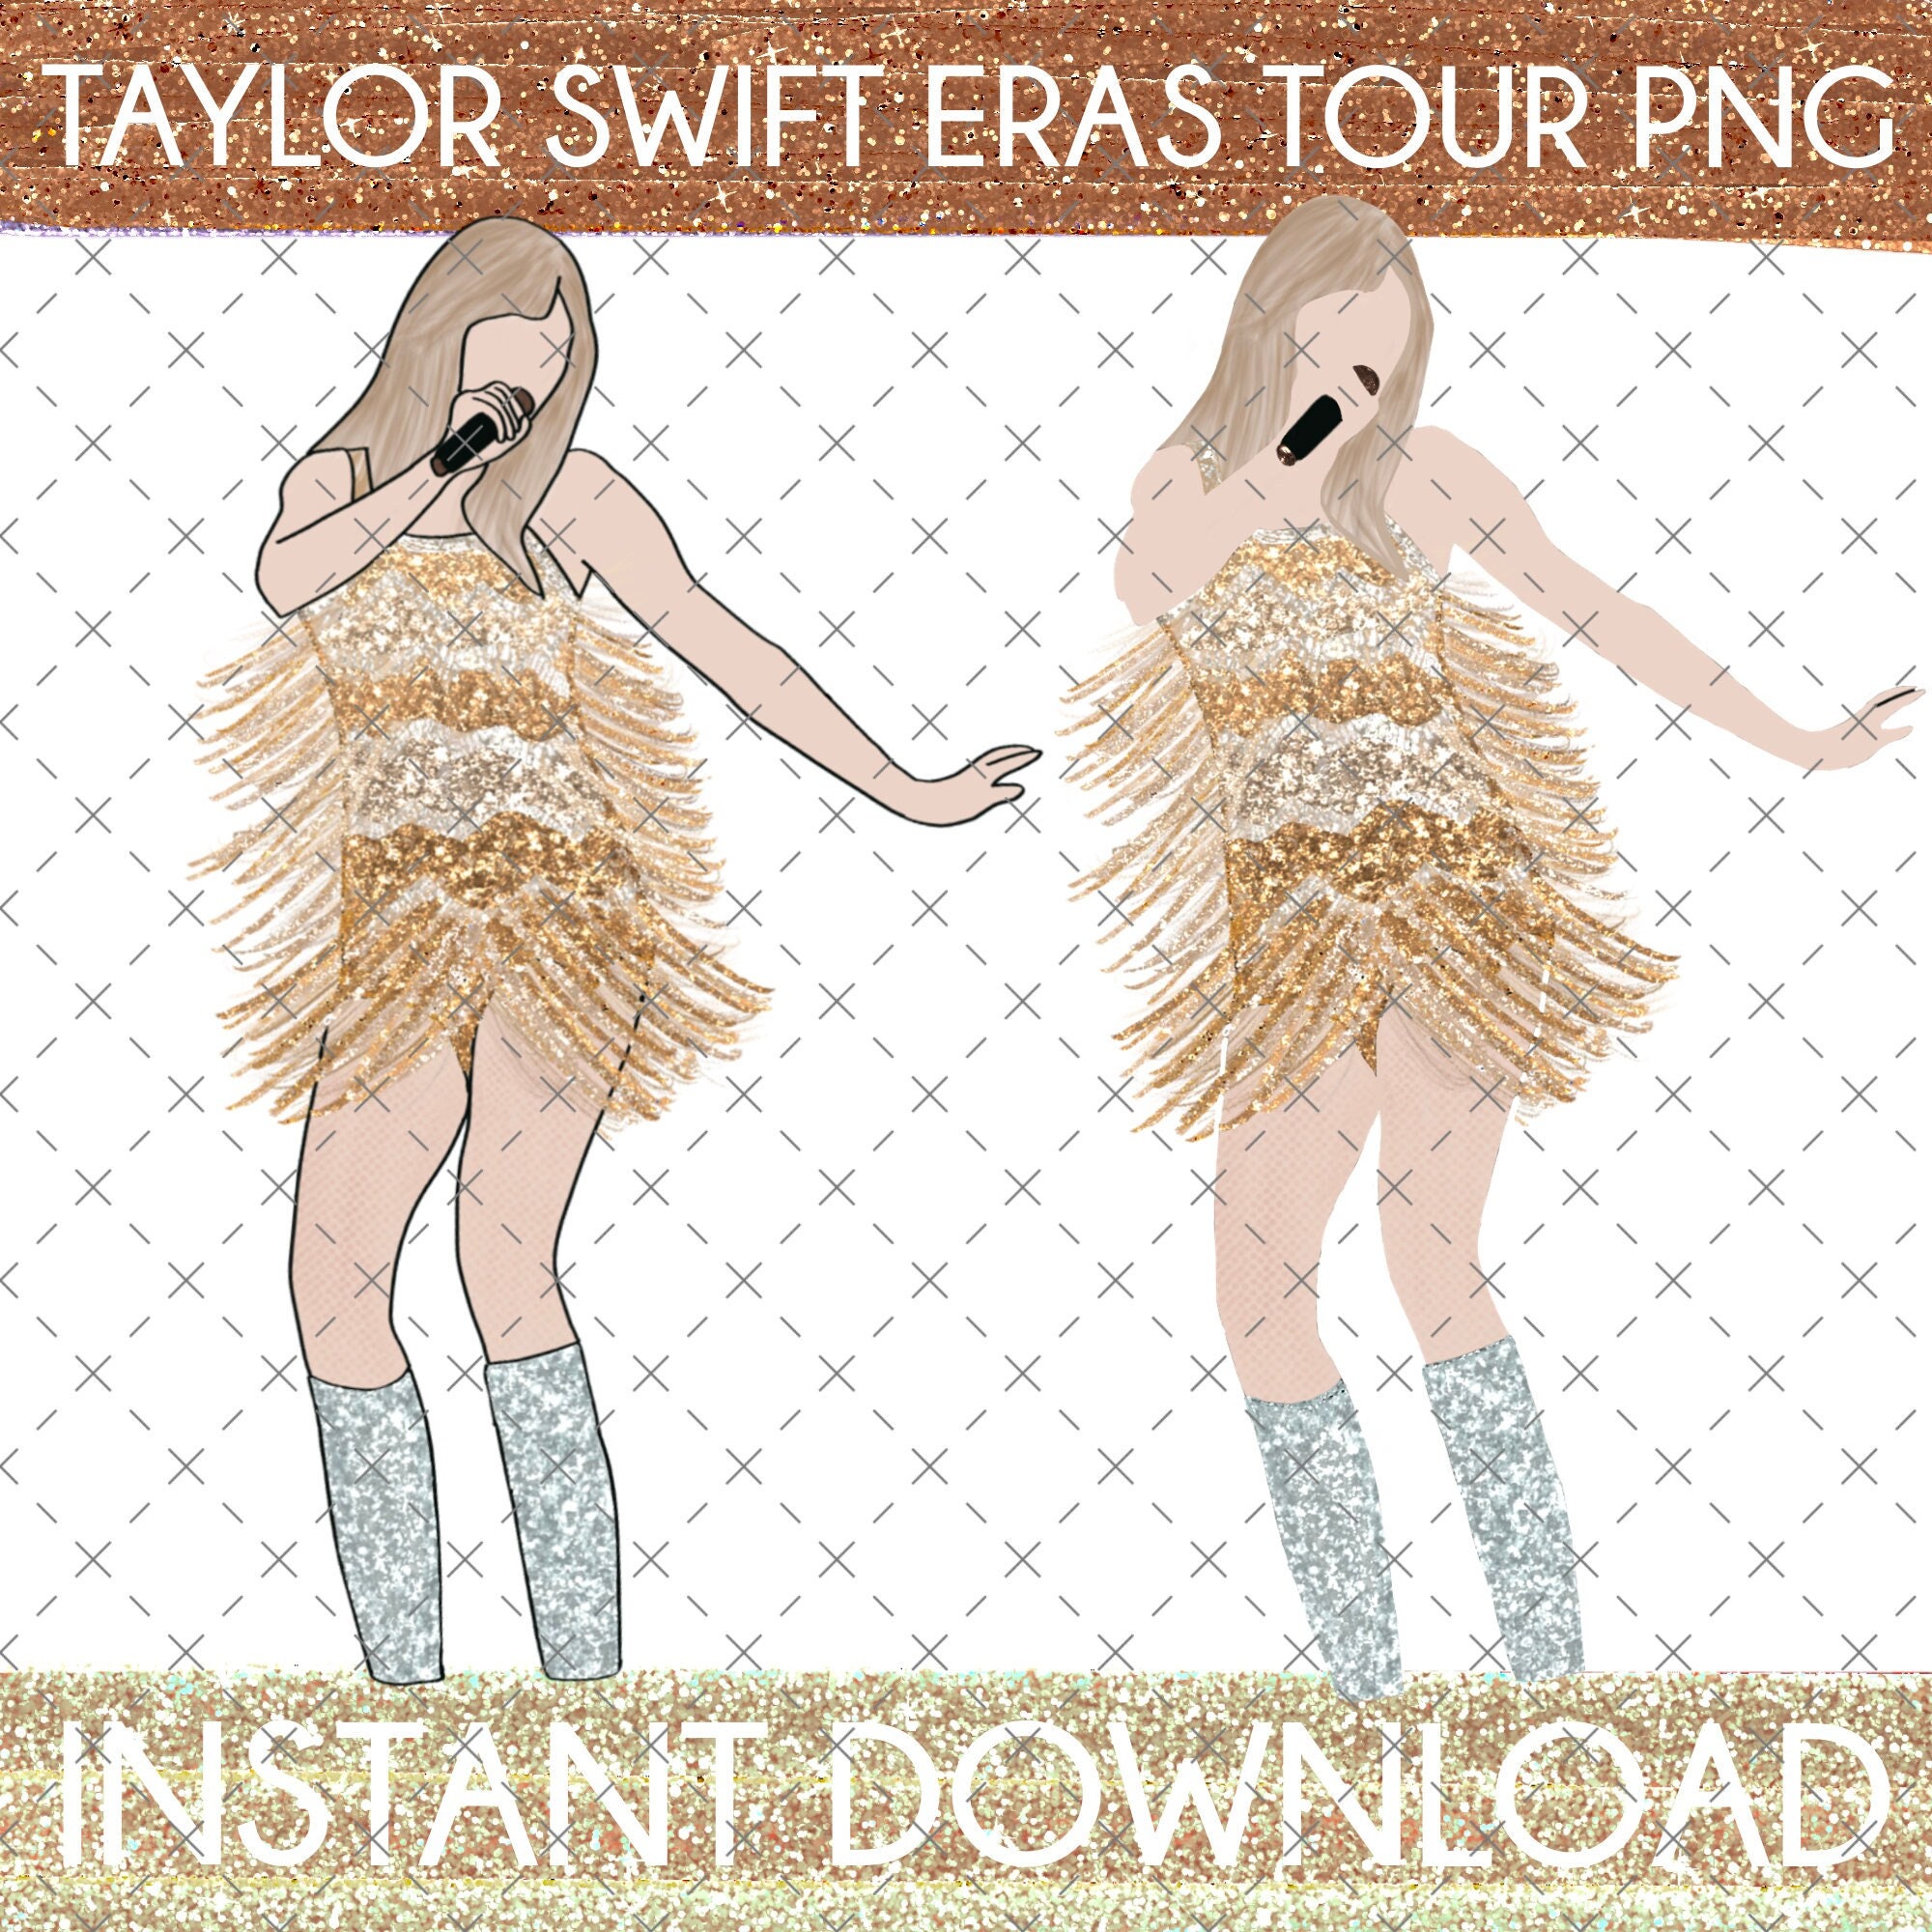 Eras Tour Taylor Swift PRINTABLE Life Size Cut Out Cardboard DIGITAL 